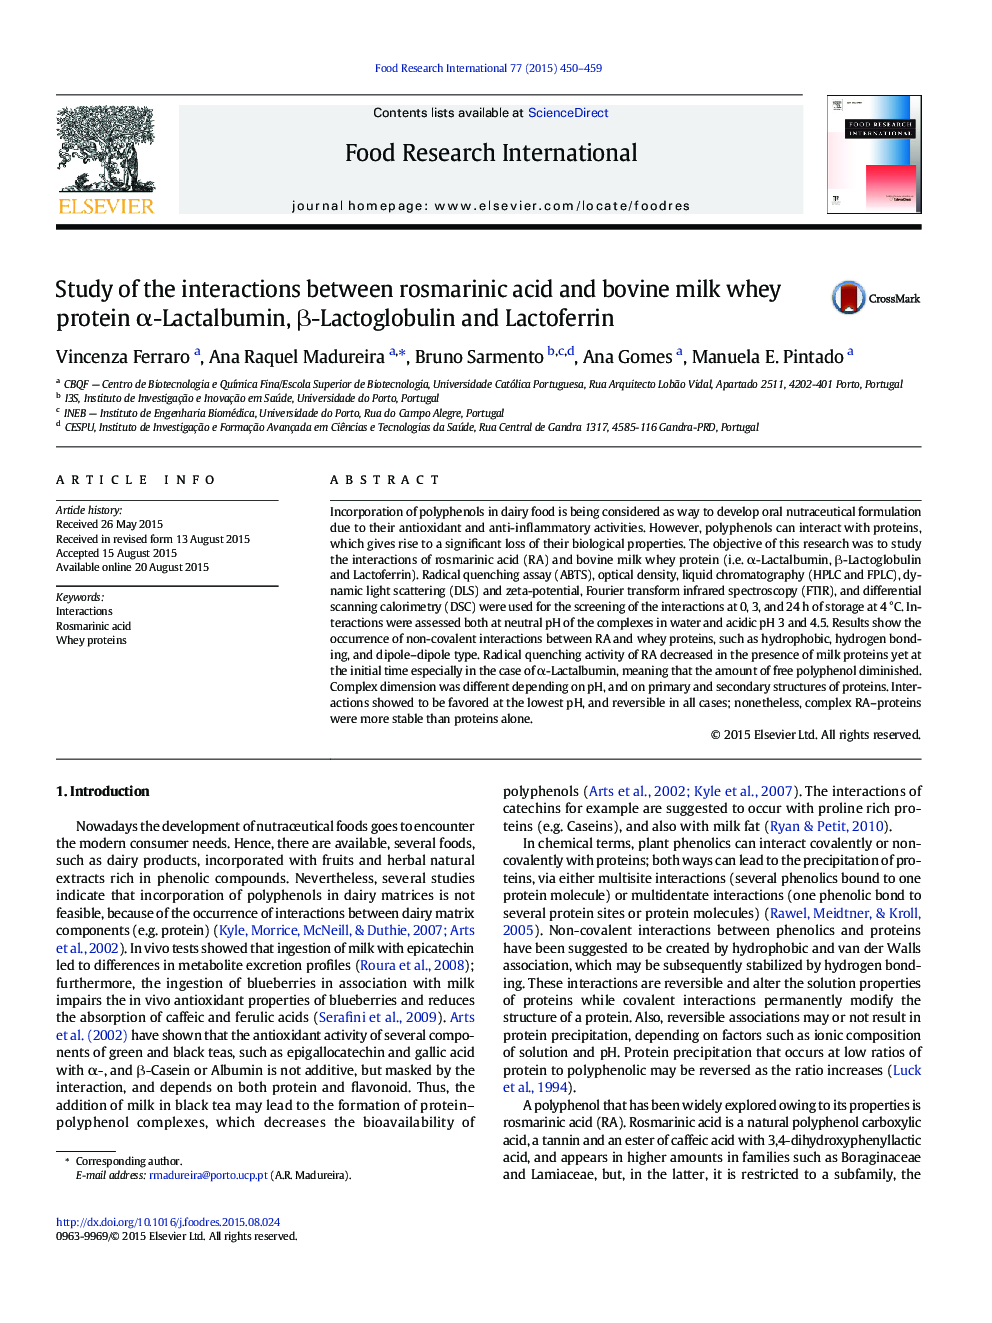 Study of the interactions between rosmarinic acid and bovine milk whey protein α-Lactalbumin, β-Lactoglobulin and Lactoferrin